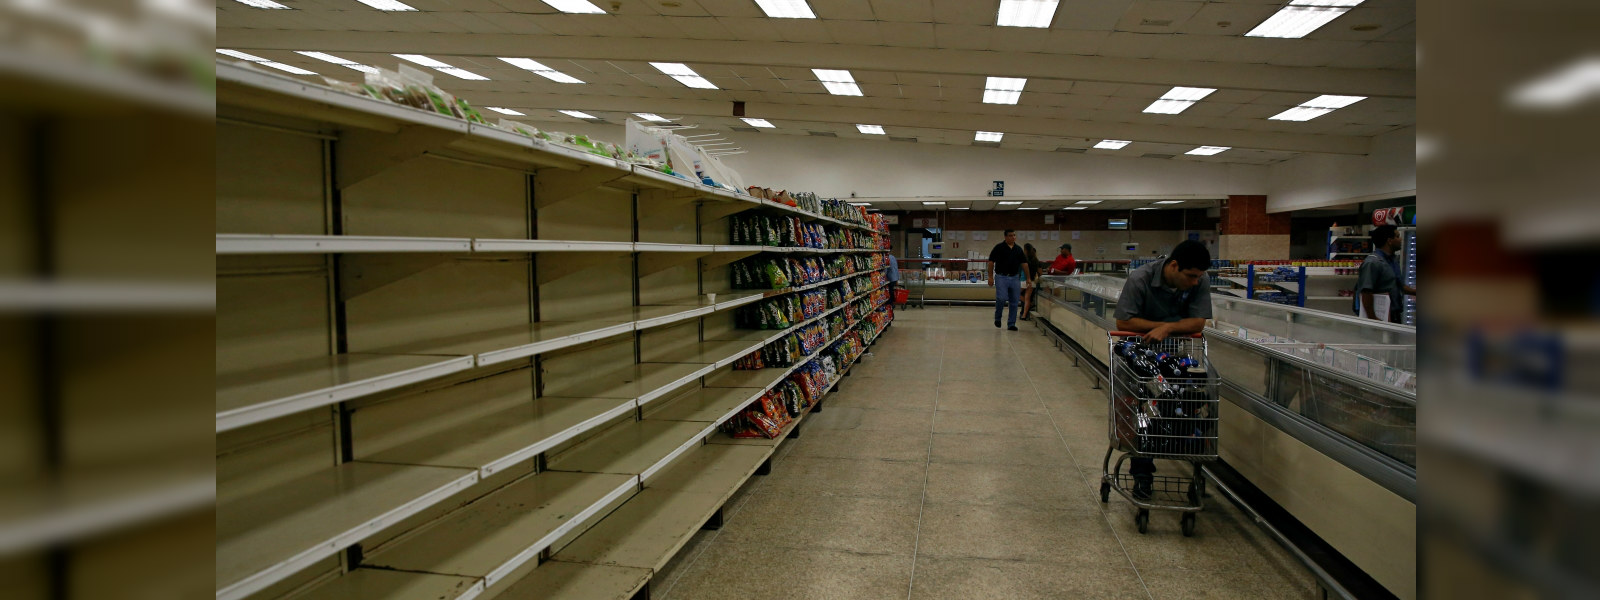 Venezuelans struggle to cope with economic crisis